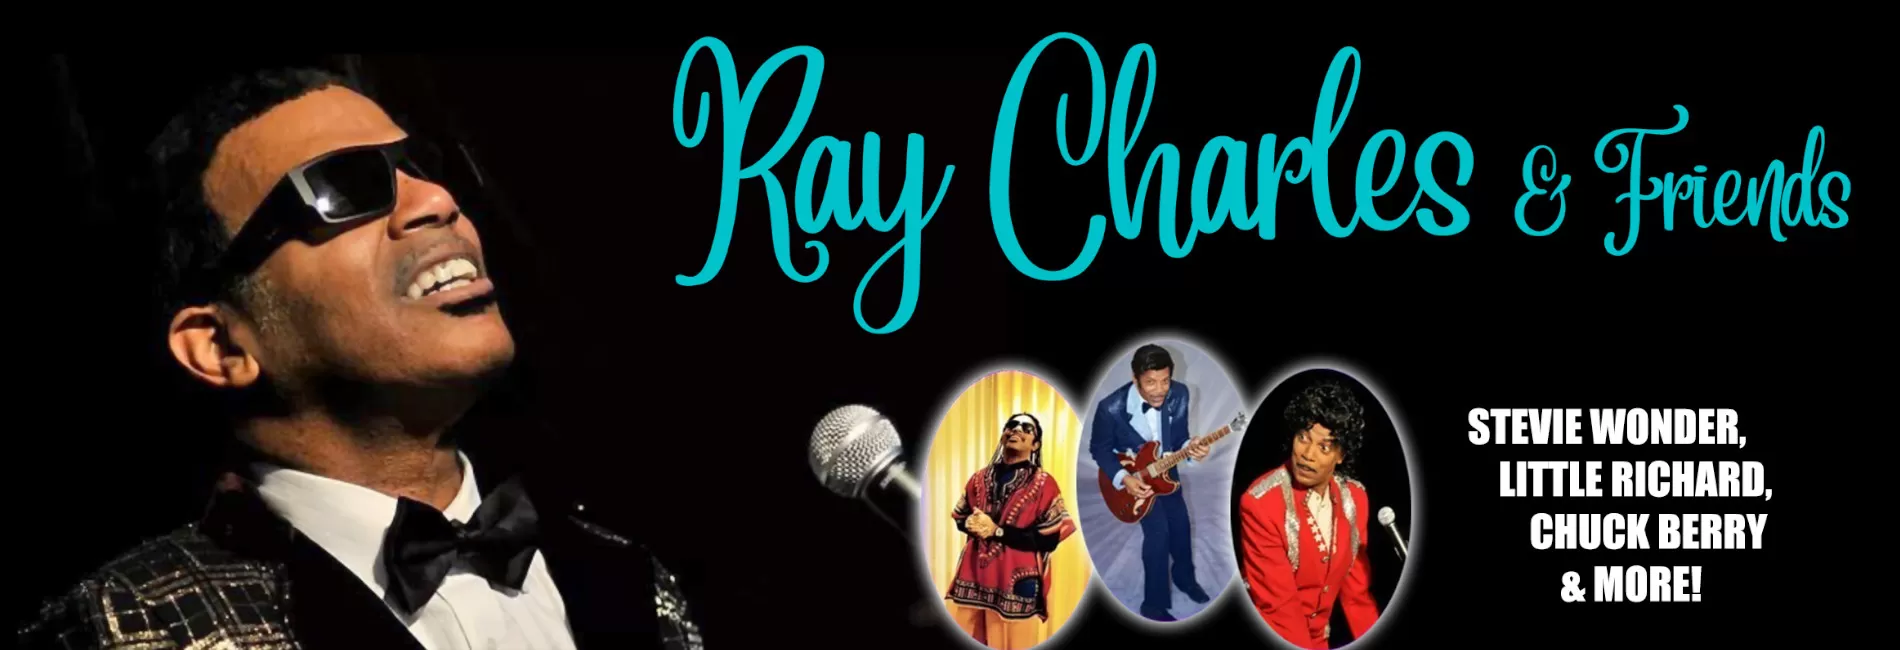 Ray Charles & Friends, starring Pete Peterkin